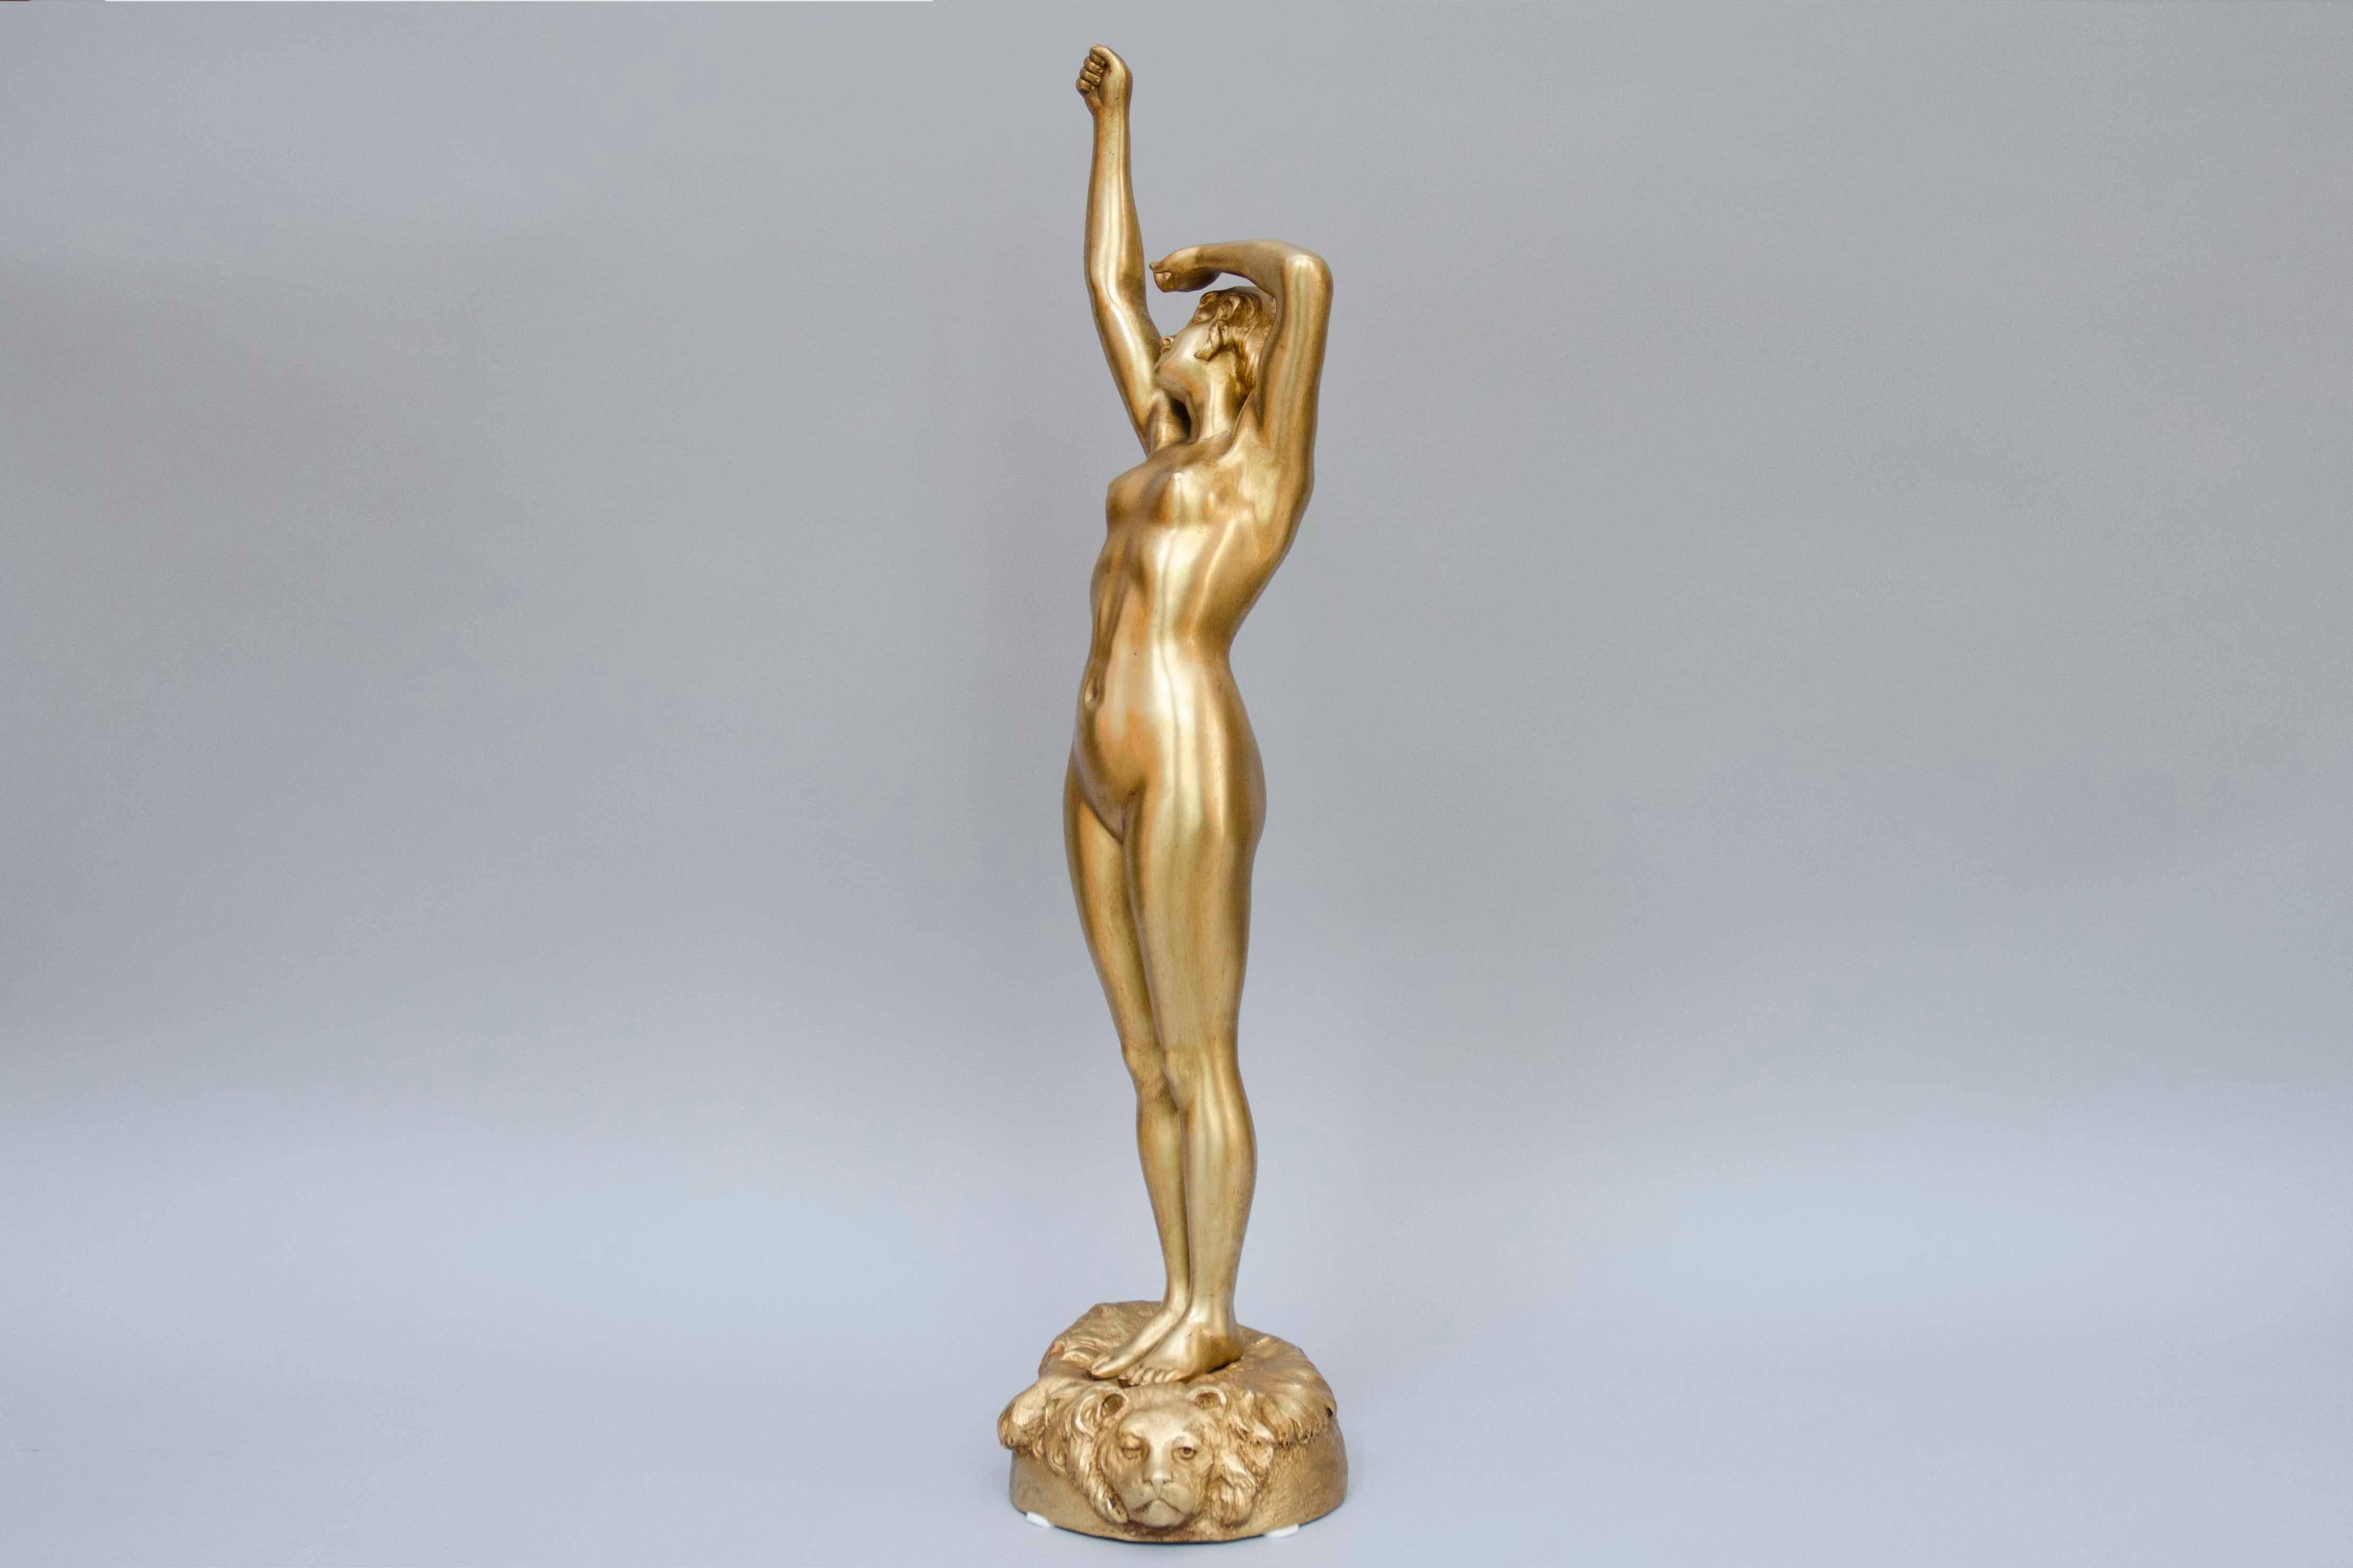 Italian Art Nouveau Bronze Sculpture of a Naked Woman, Salammbo by Calendi Armando